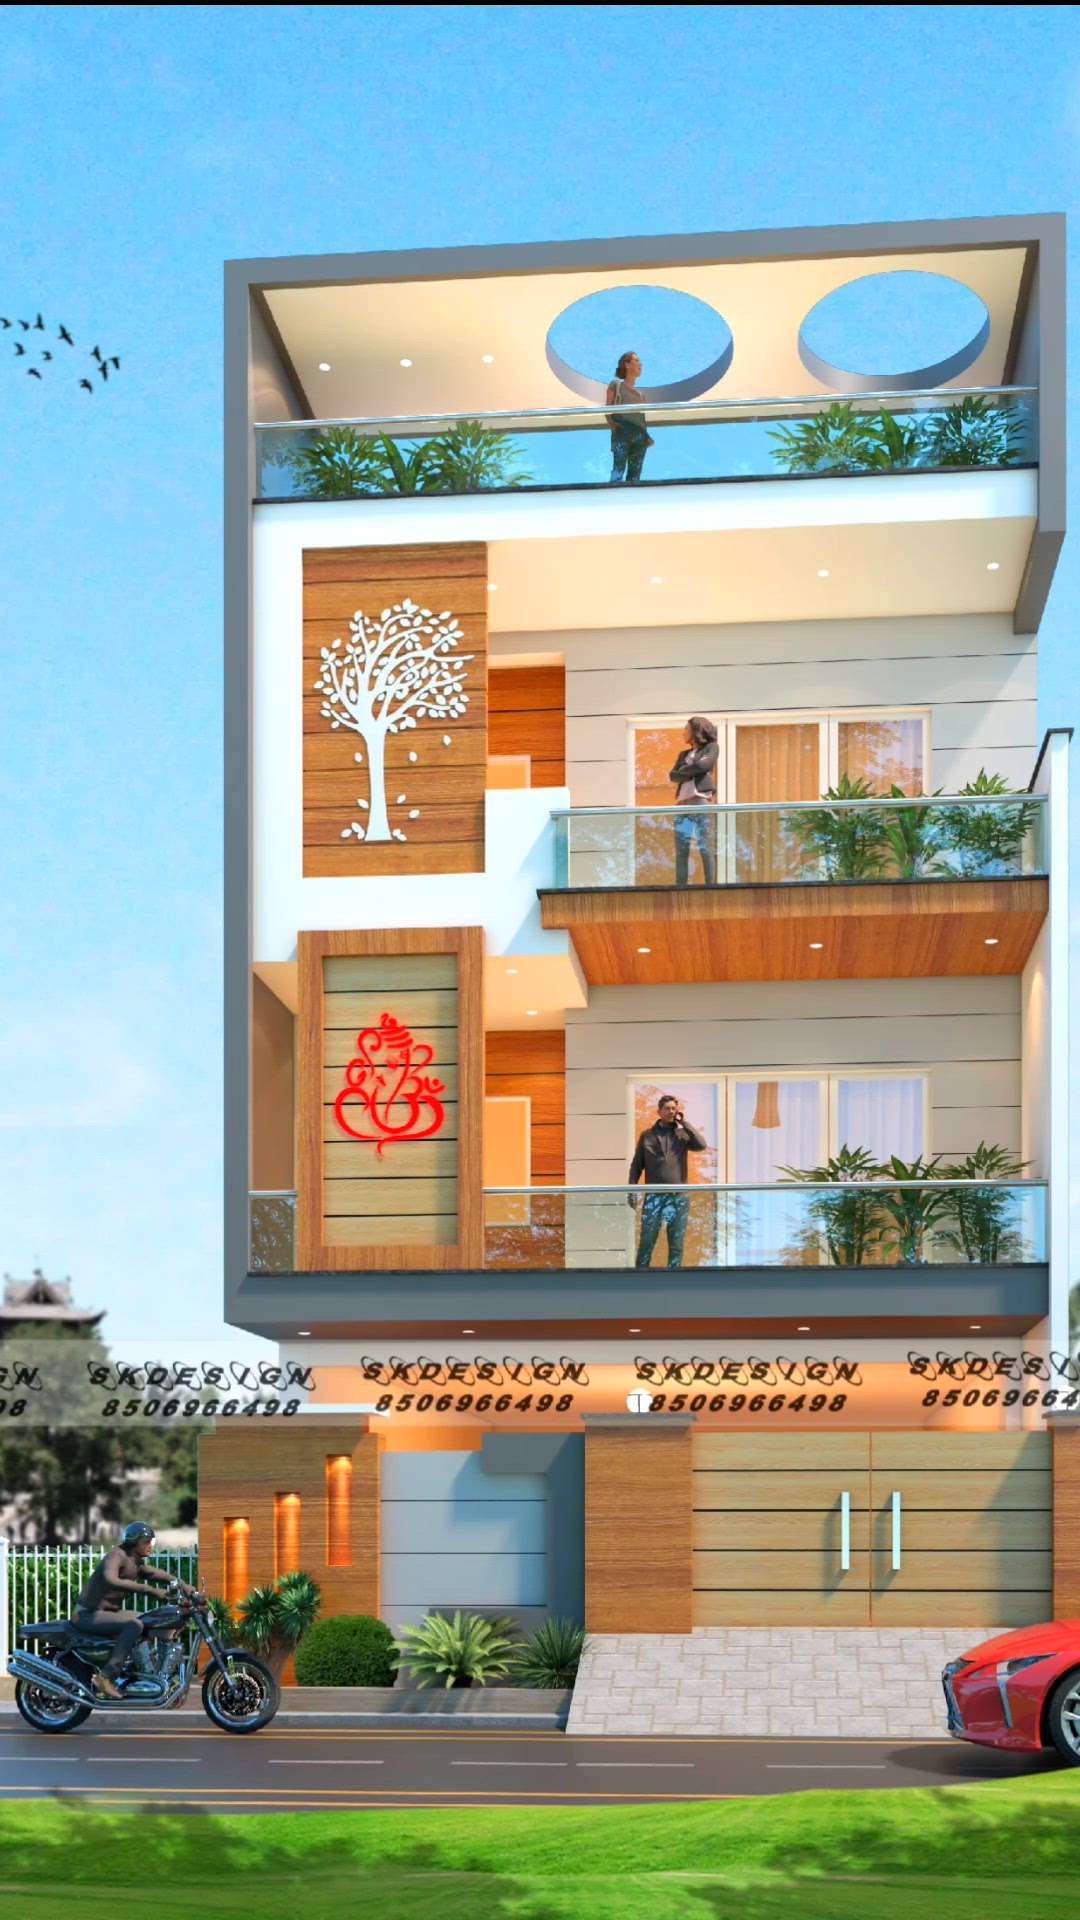 modern home design😘❤
#HouseDesigns #homedesignkerala #indiadesign #homedesigningideas #ElevationHome #ElevationDesign #Architect #architecturedesigns #skdesign666 #3dfrontelevation